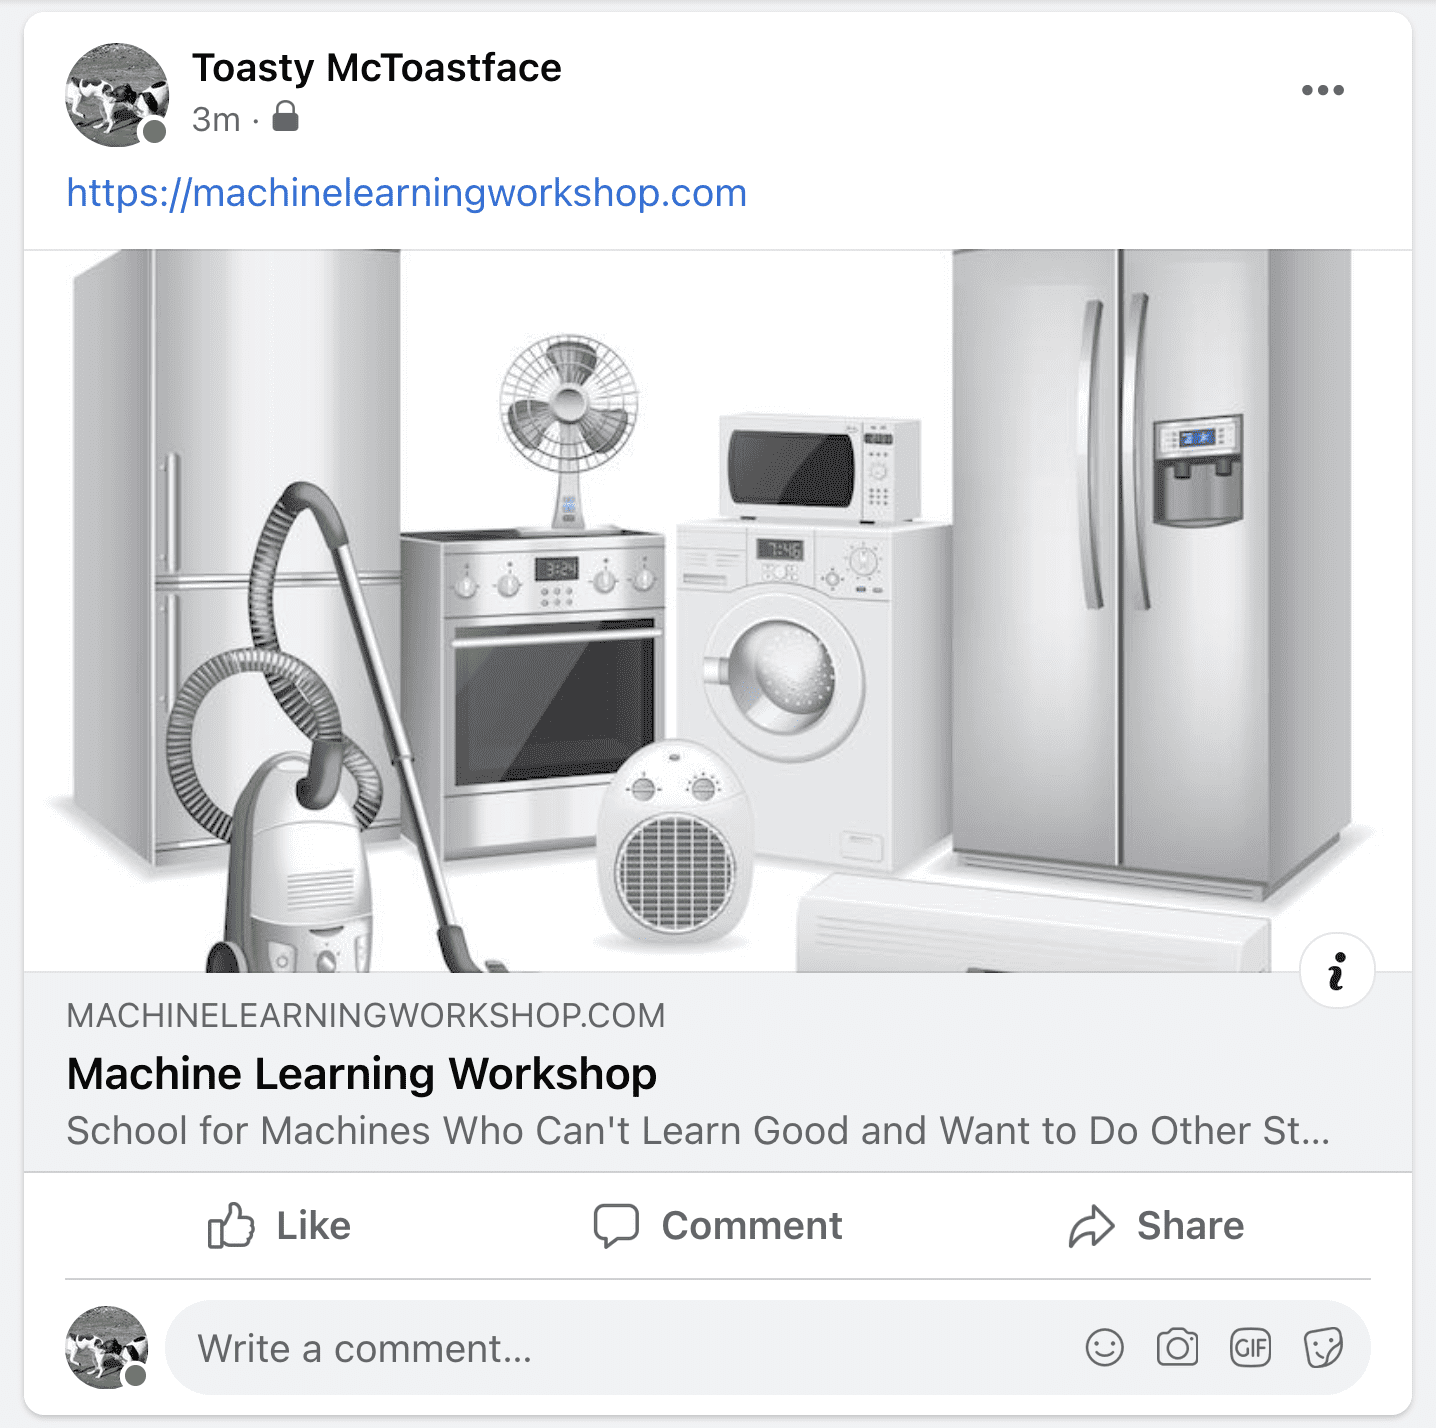 Scheda Facebook per il workshop sul machine learning.